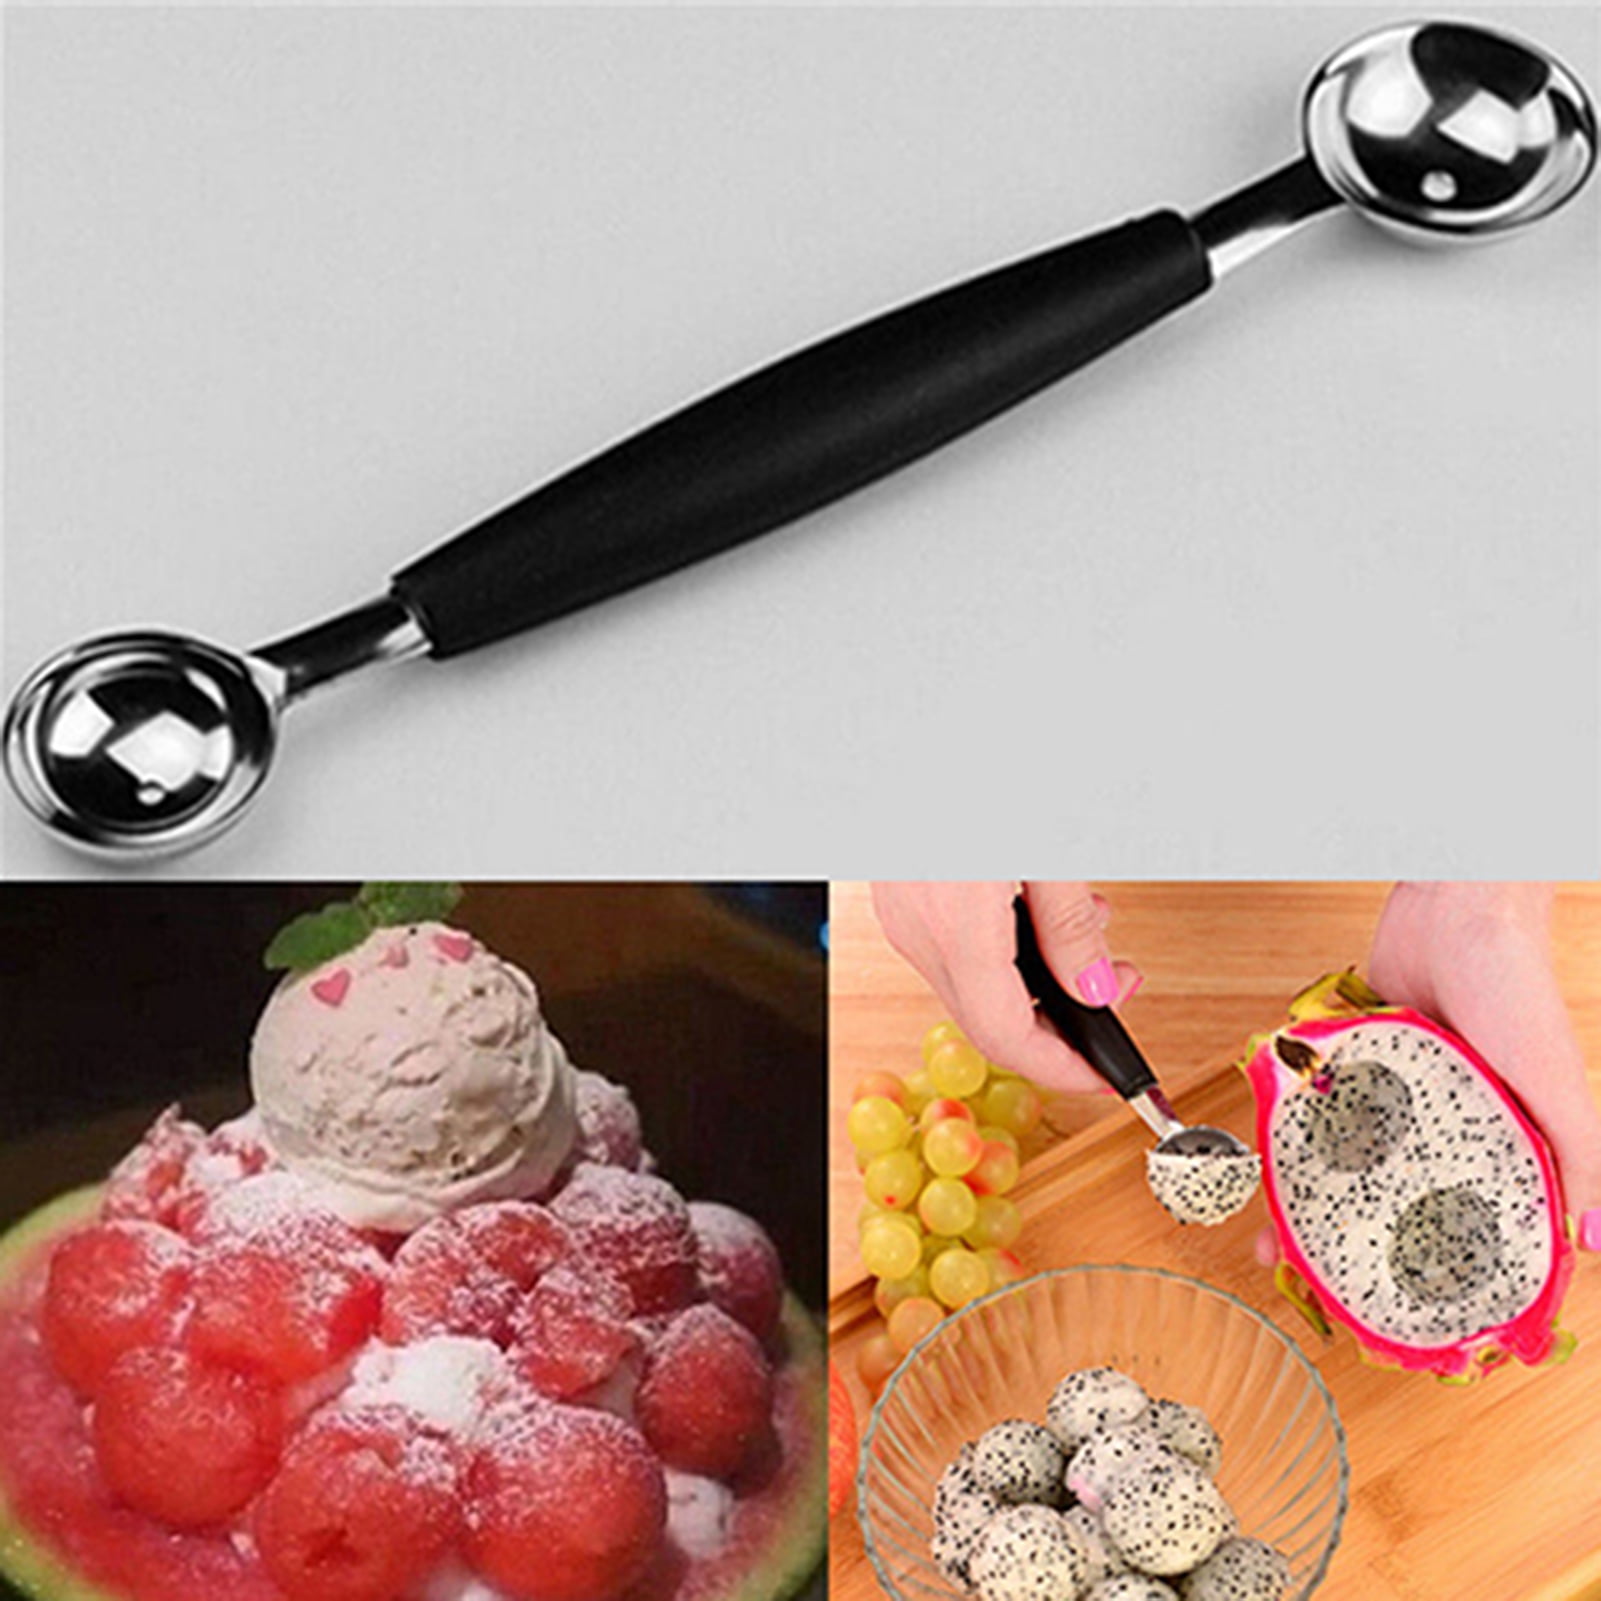 1x Cream Kitchen Stainless Steel Spoon Double-End Fruit Melon Cutter Baller